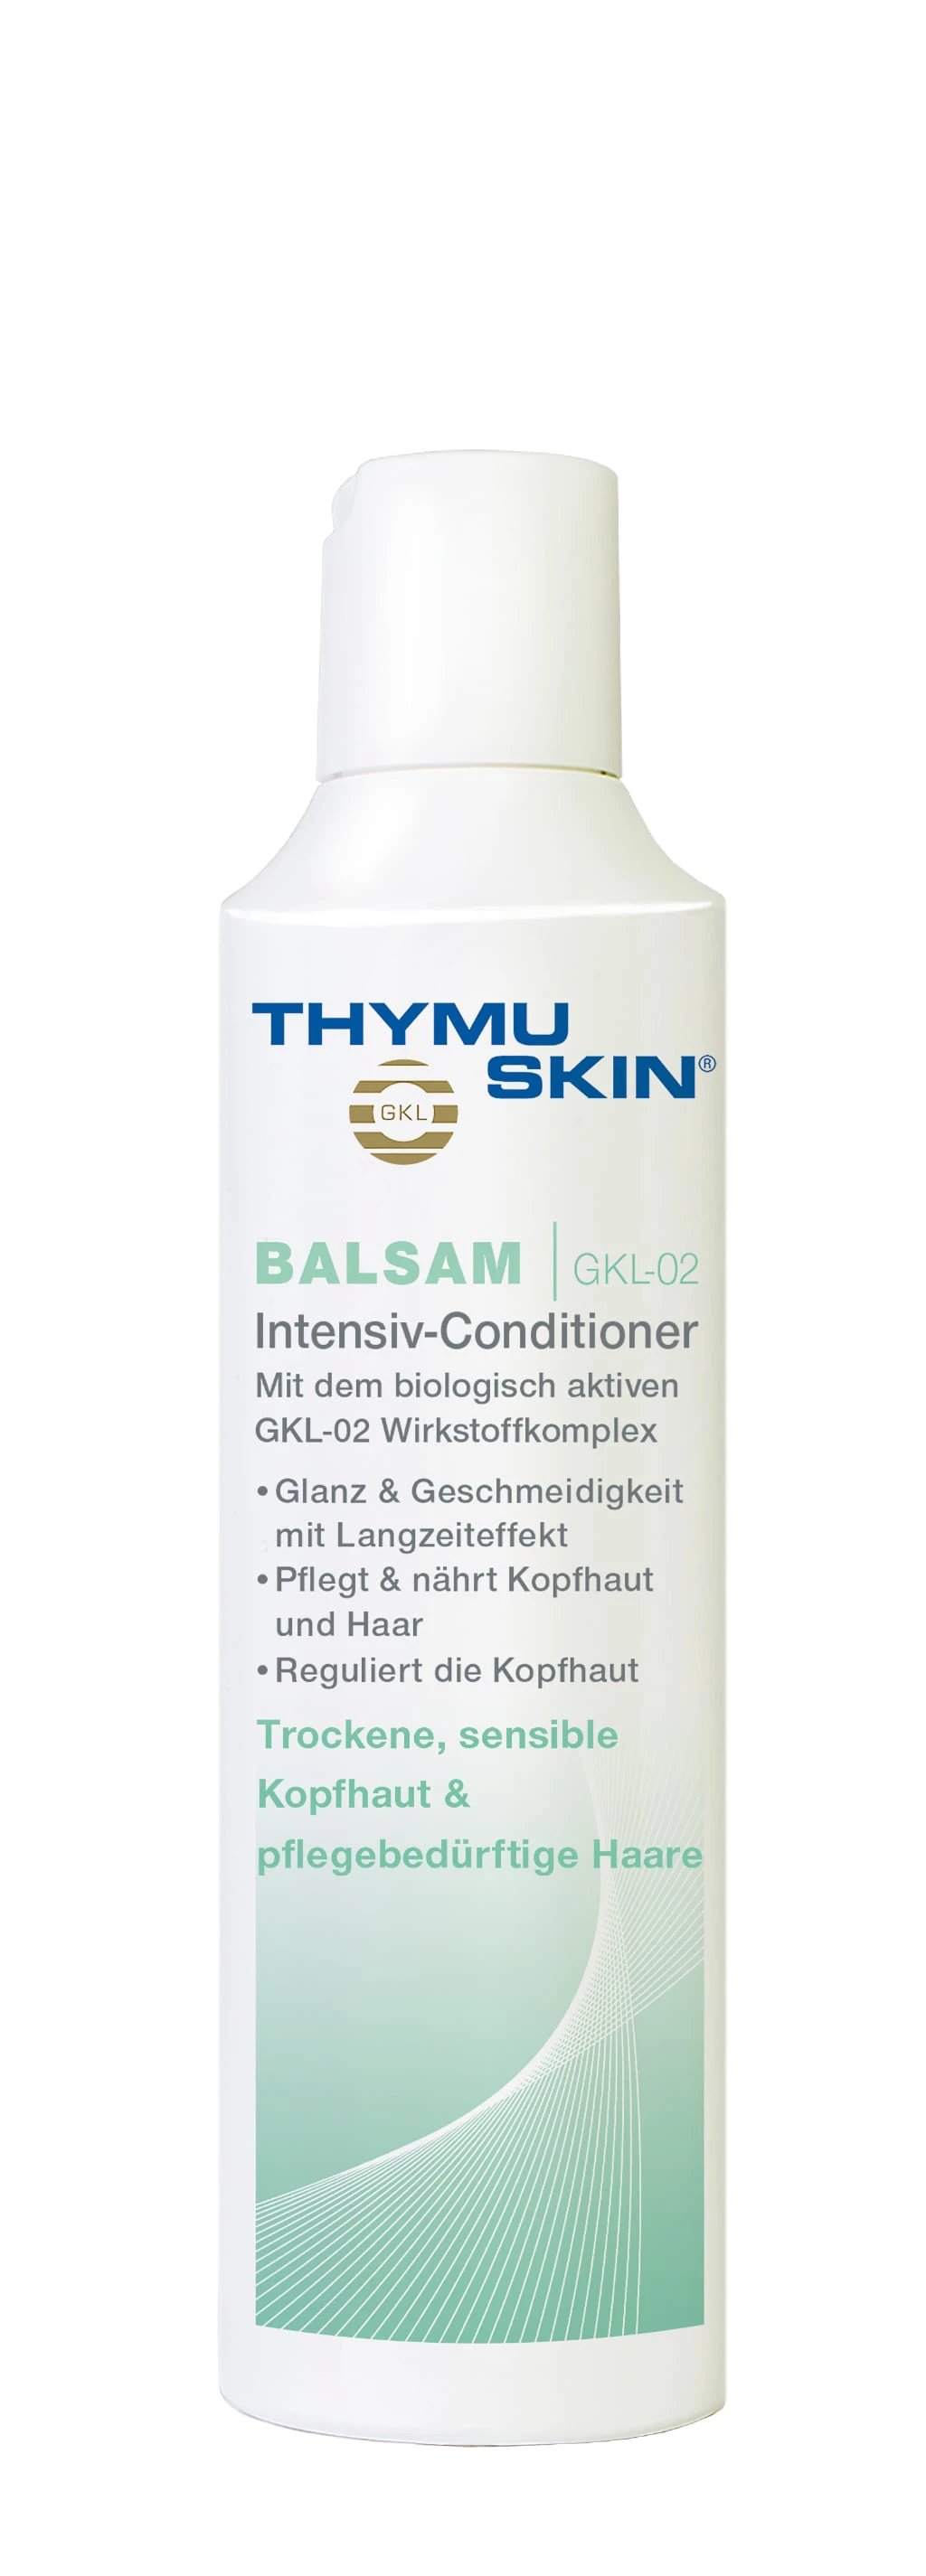 BALSAM Intensive-Conditioner